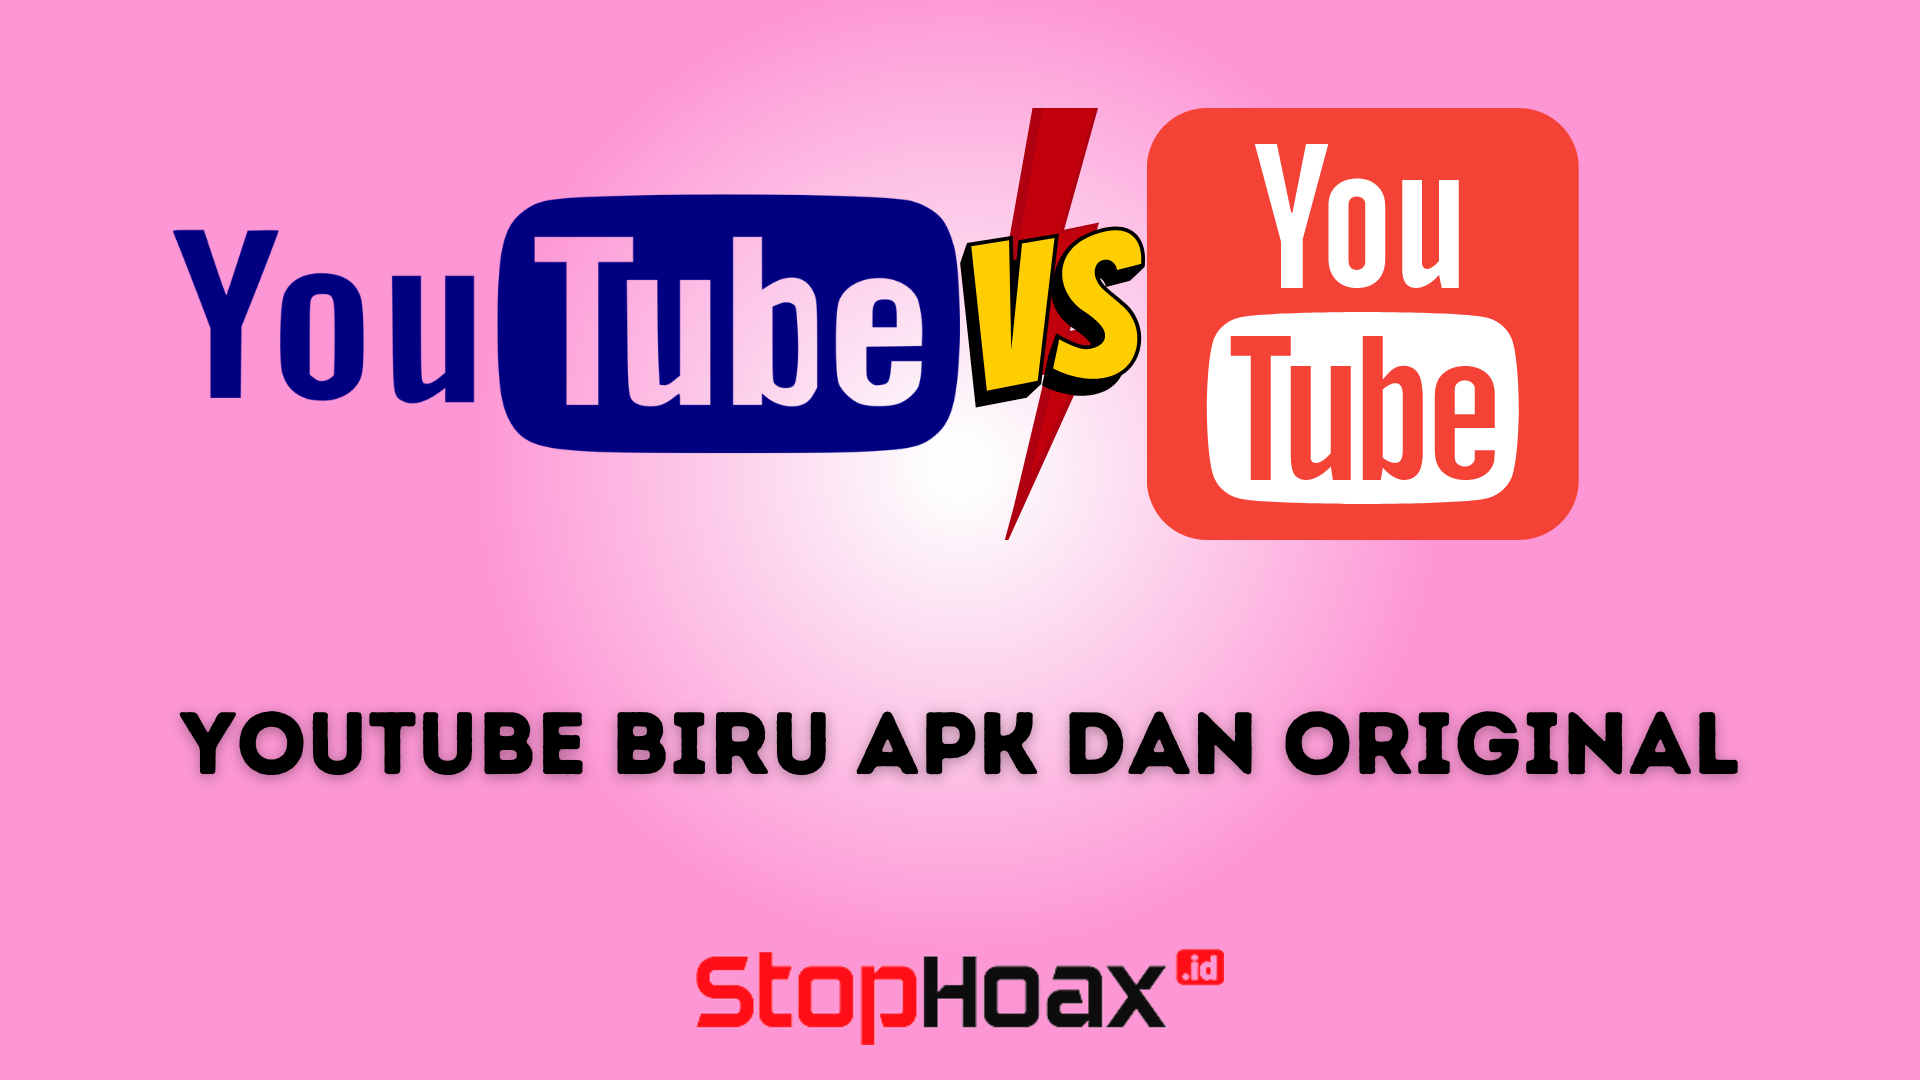 YouTube Biru APK dan YouTube Original Mana yang Lebih Baik untuk Menonton Video